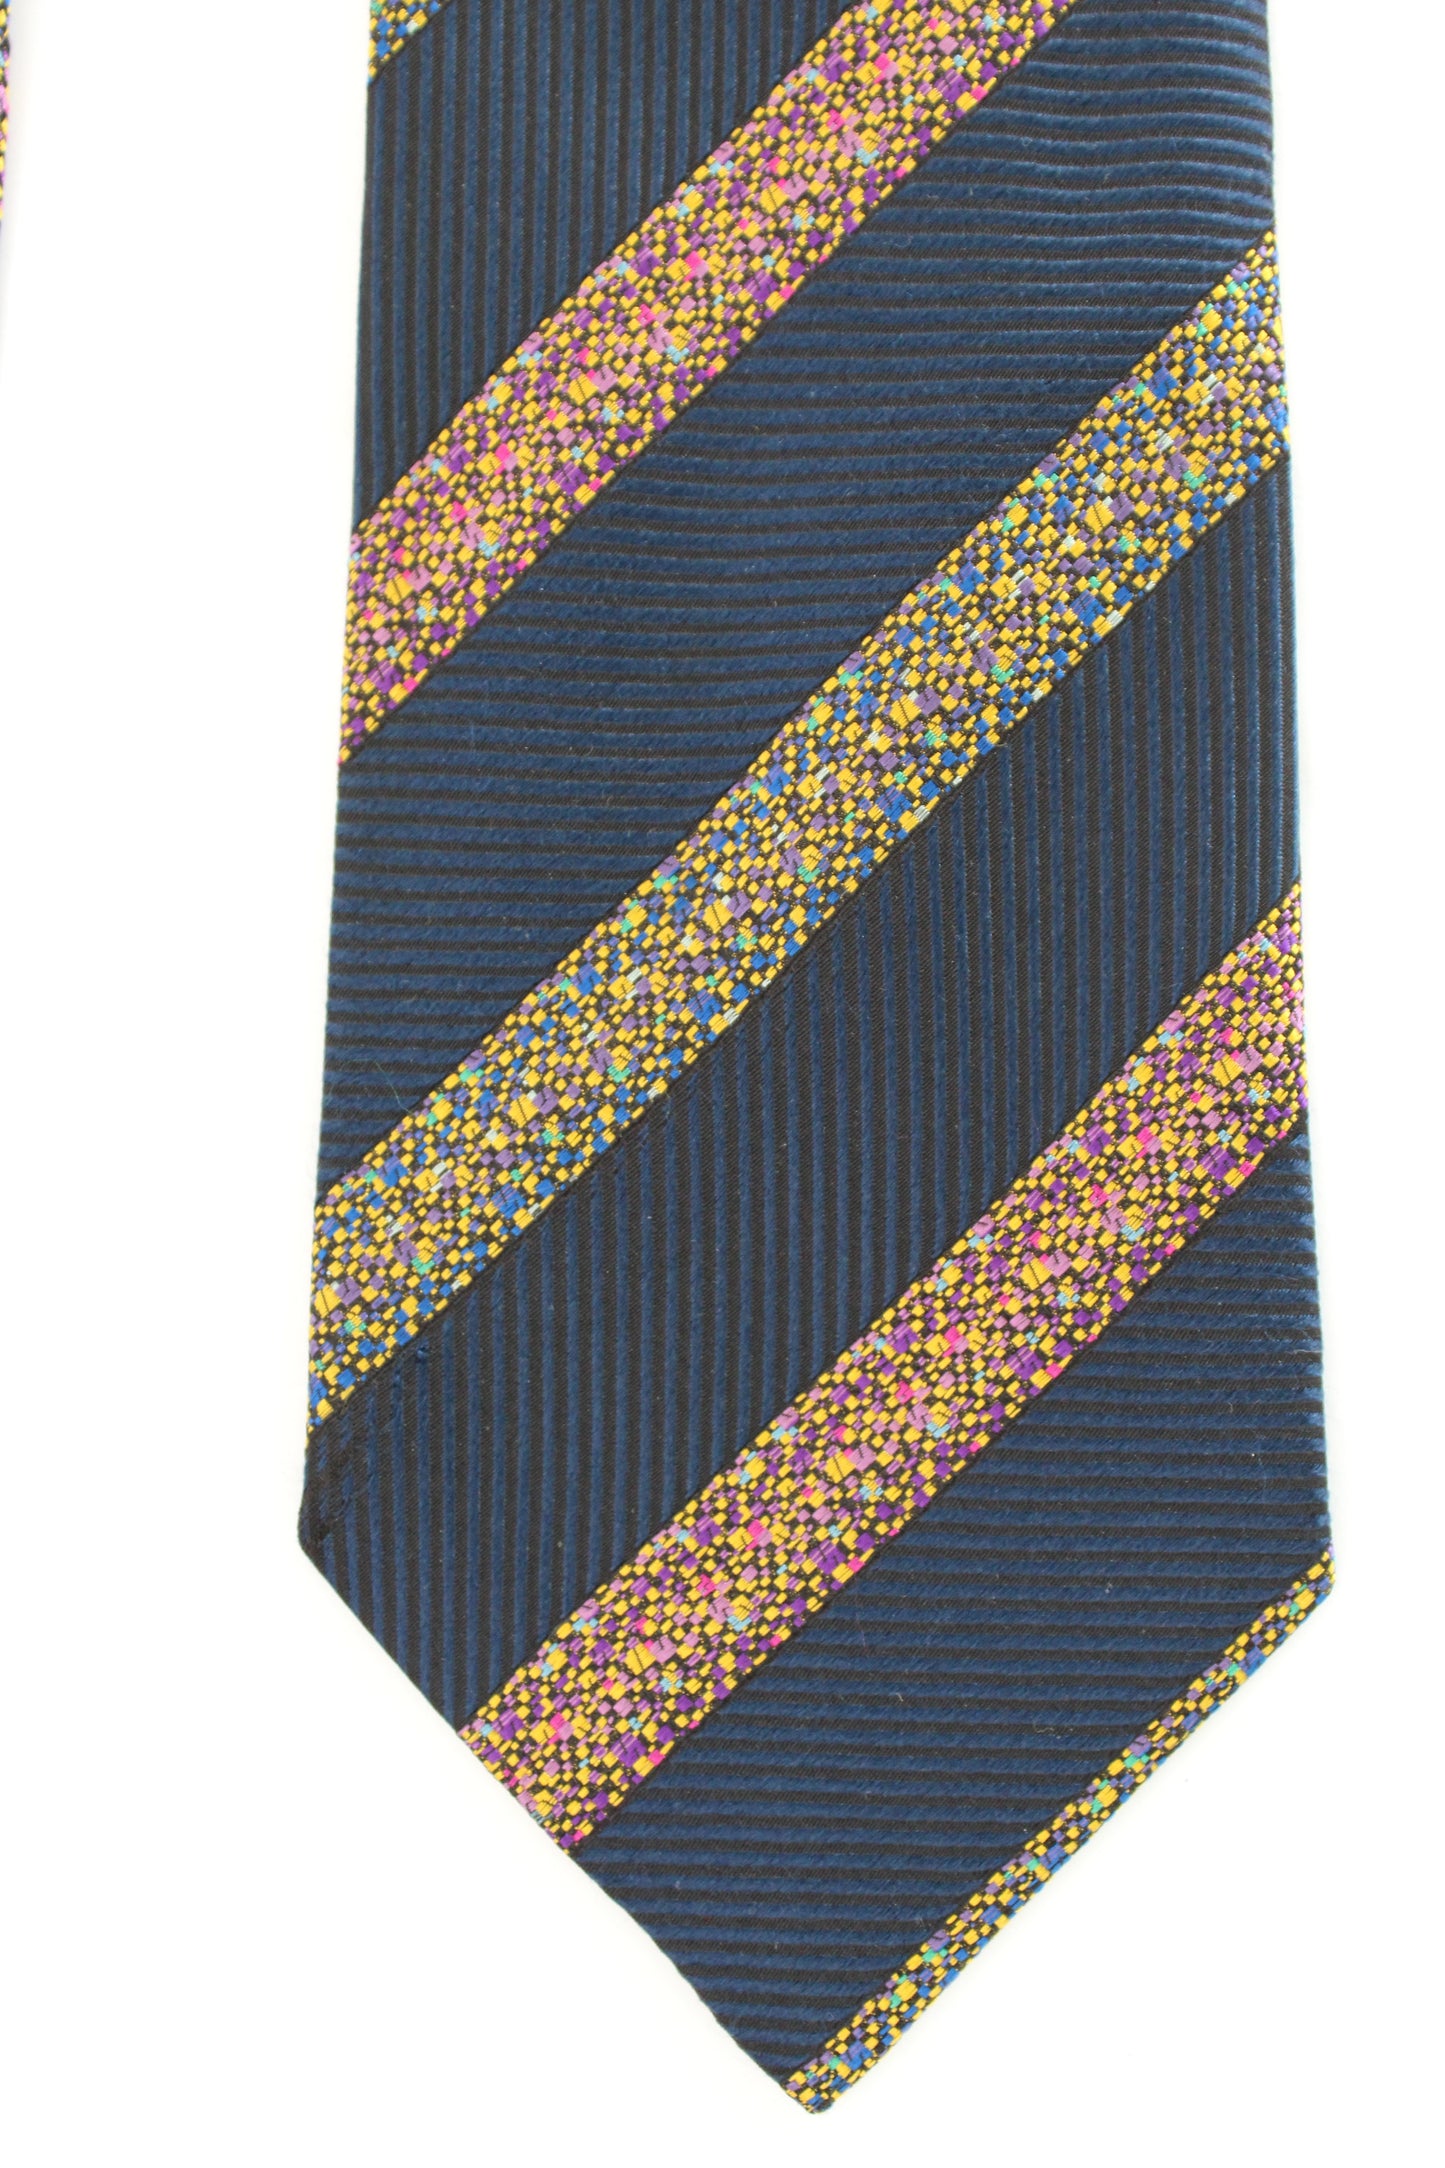 Missoni Cravatta Reggimentale Vintage in Seta Blu Giallo